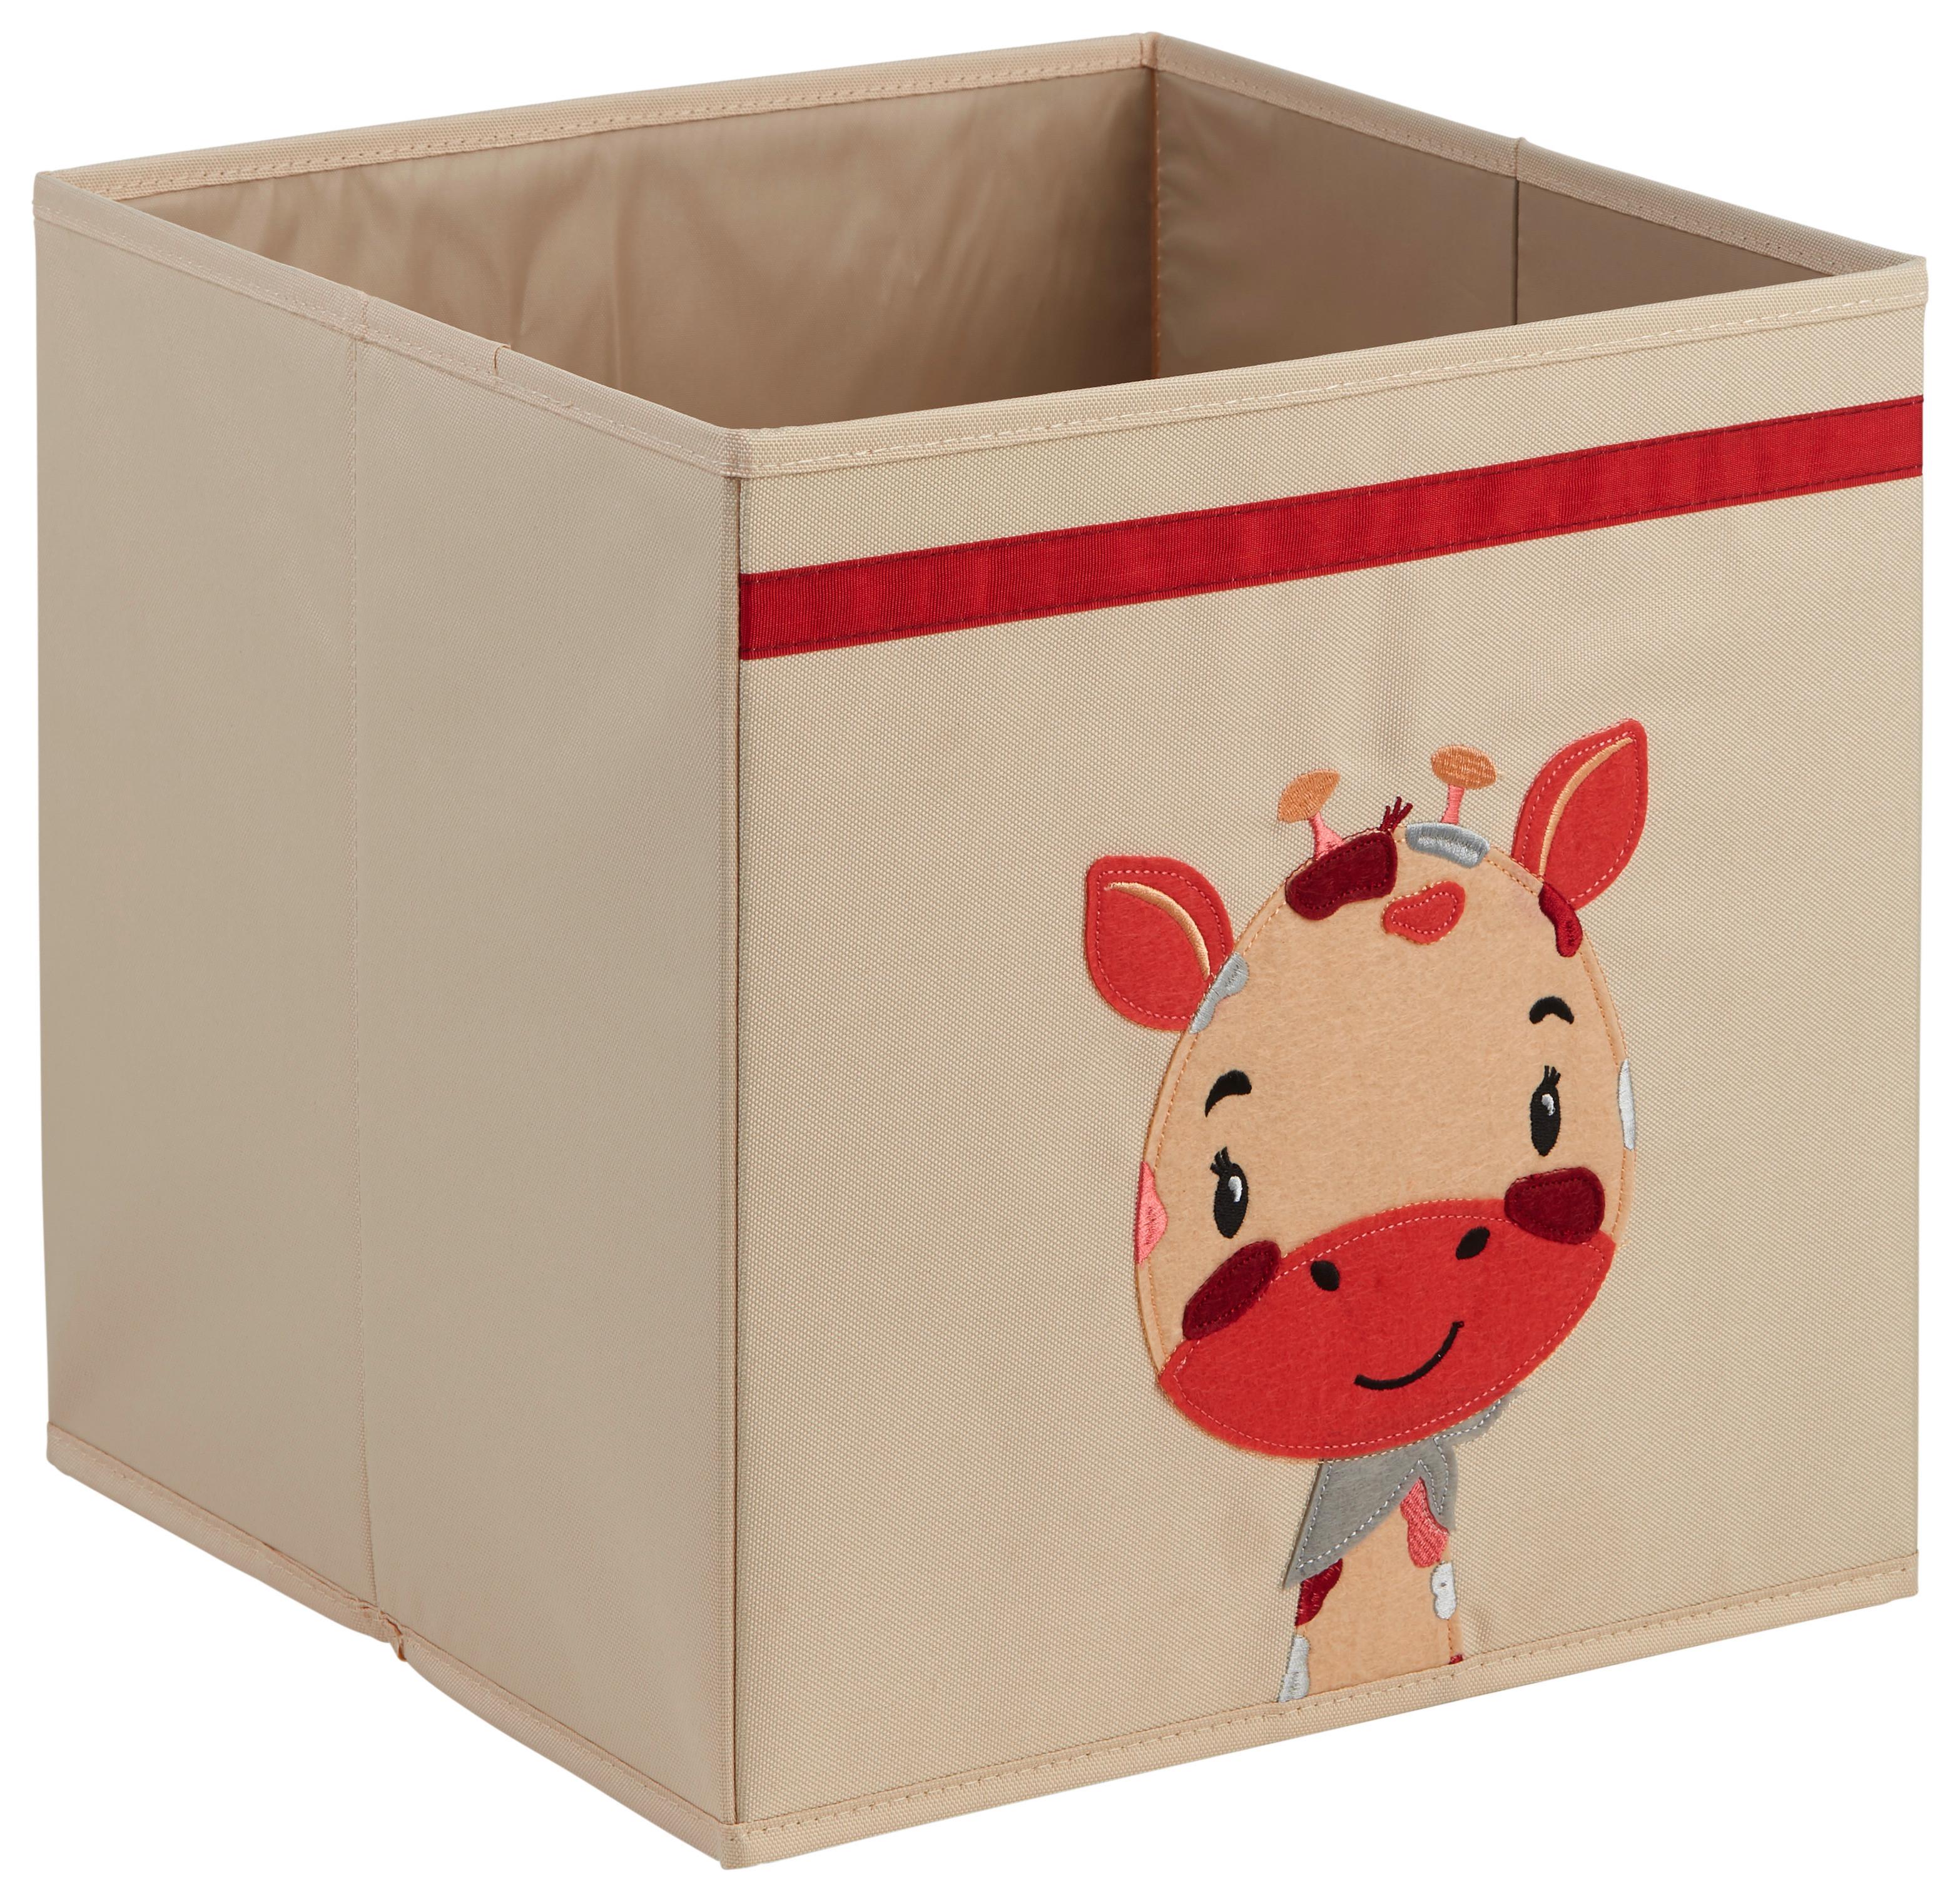 Skládací Krabice Peter - Ca. 34l -Ext- - krémová/červená, karton/textil (33/32/33cm) - Modern Living